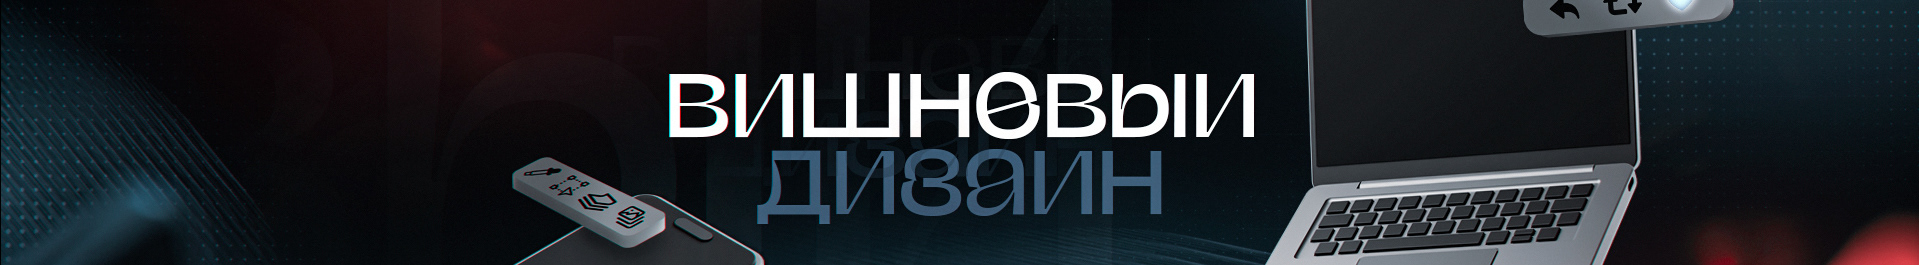 Artem Cherry's profile banner